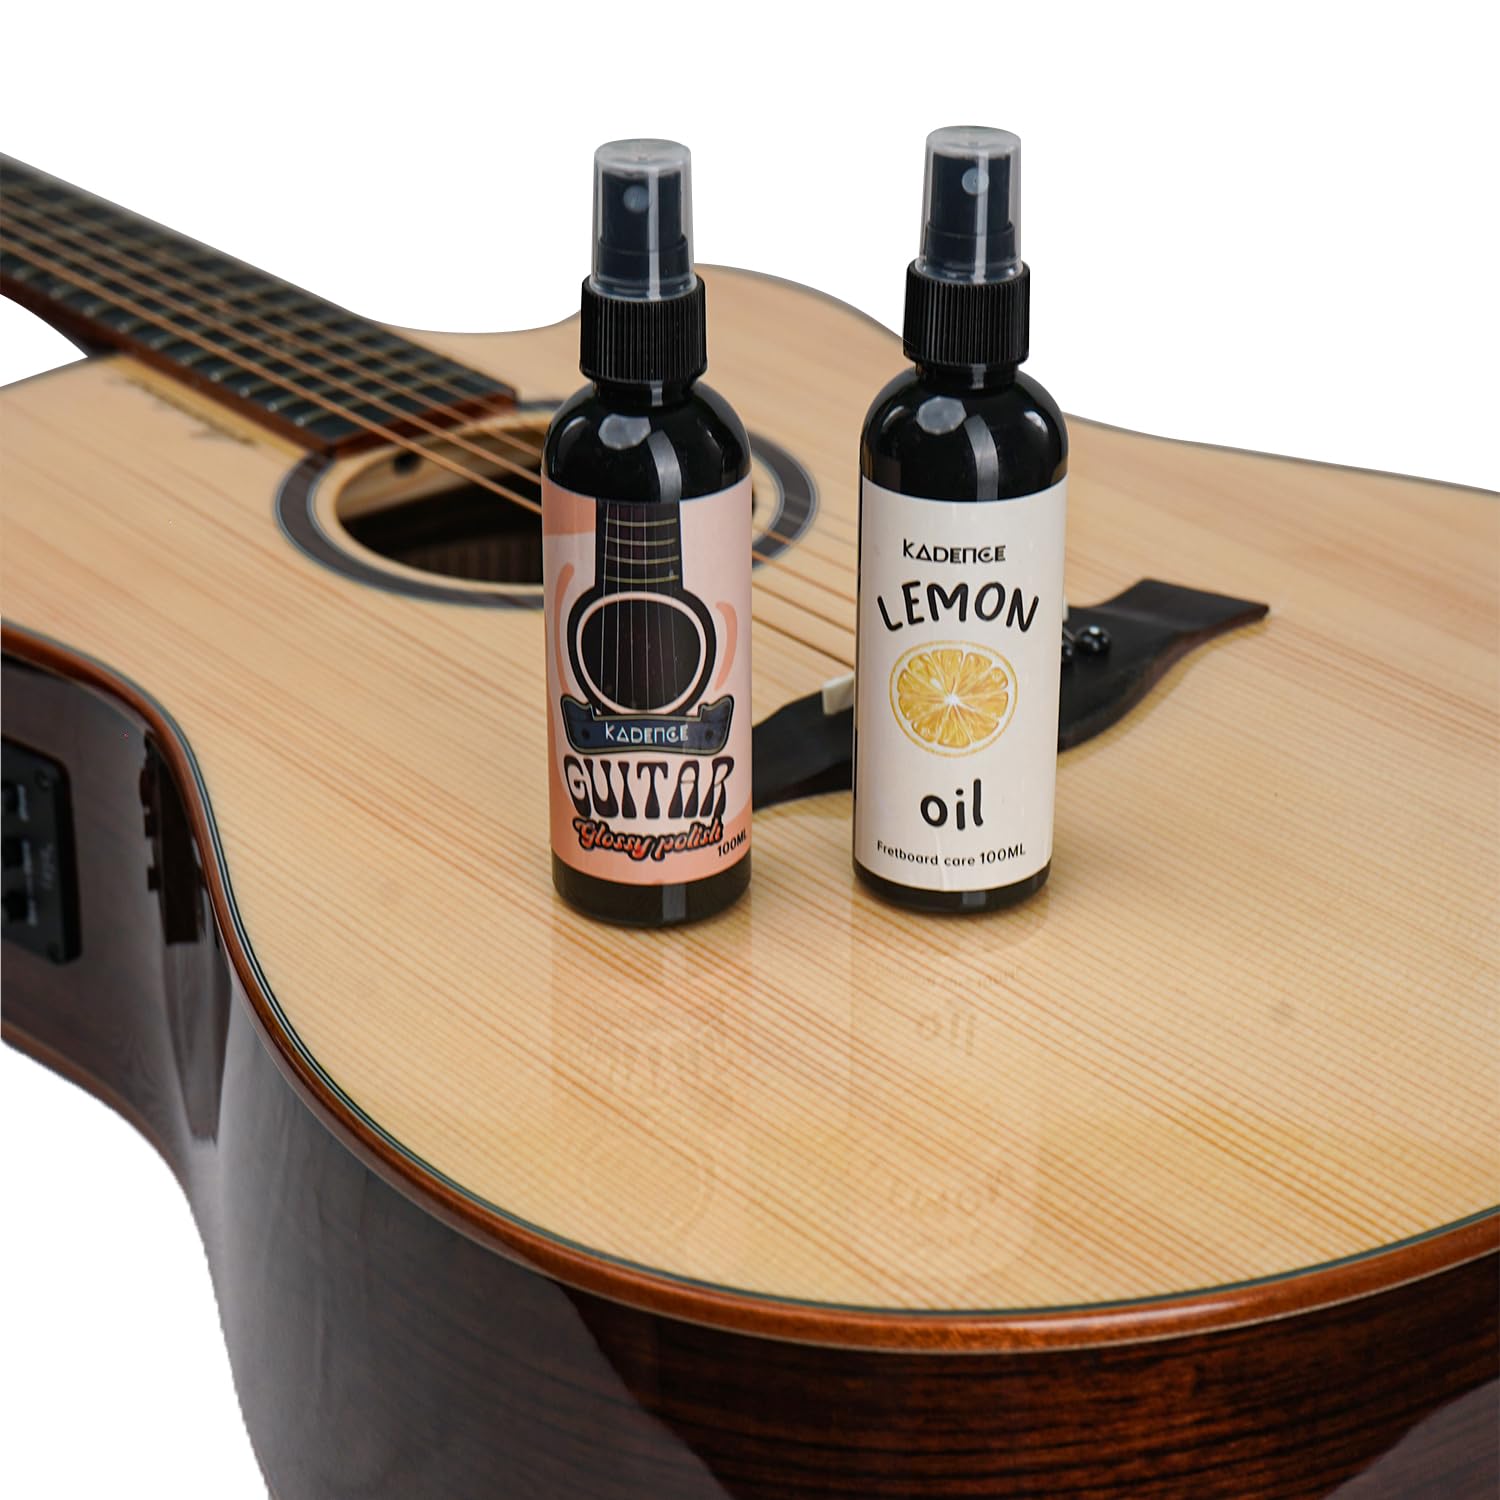 Buy 100ml Lemon Oil and 100ml Glossy Guitar Polish